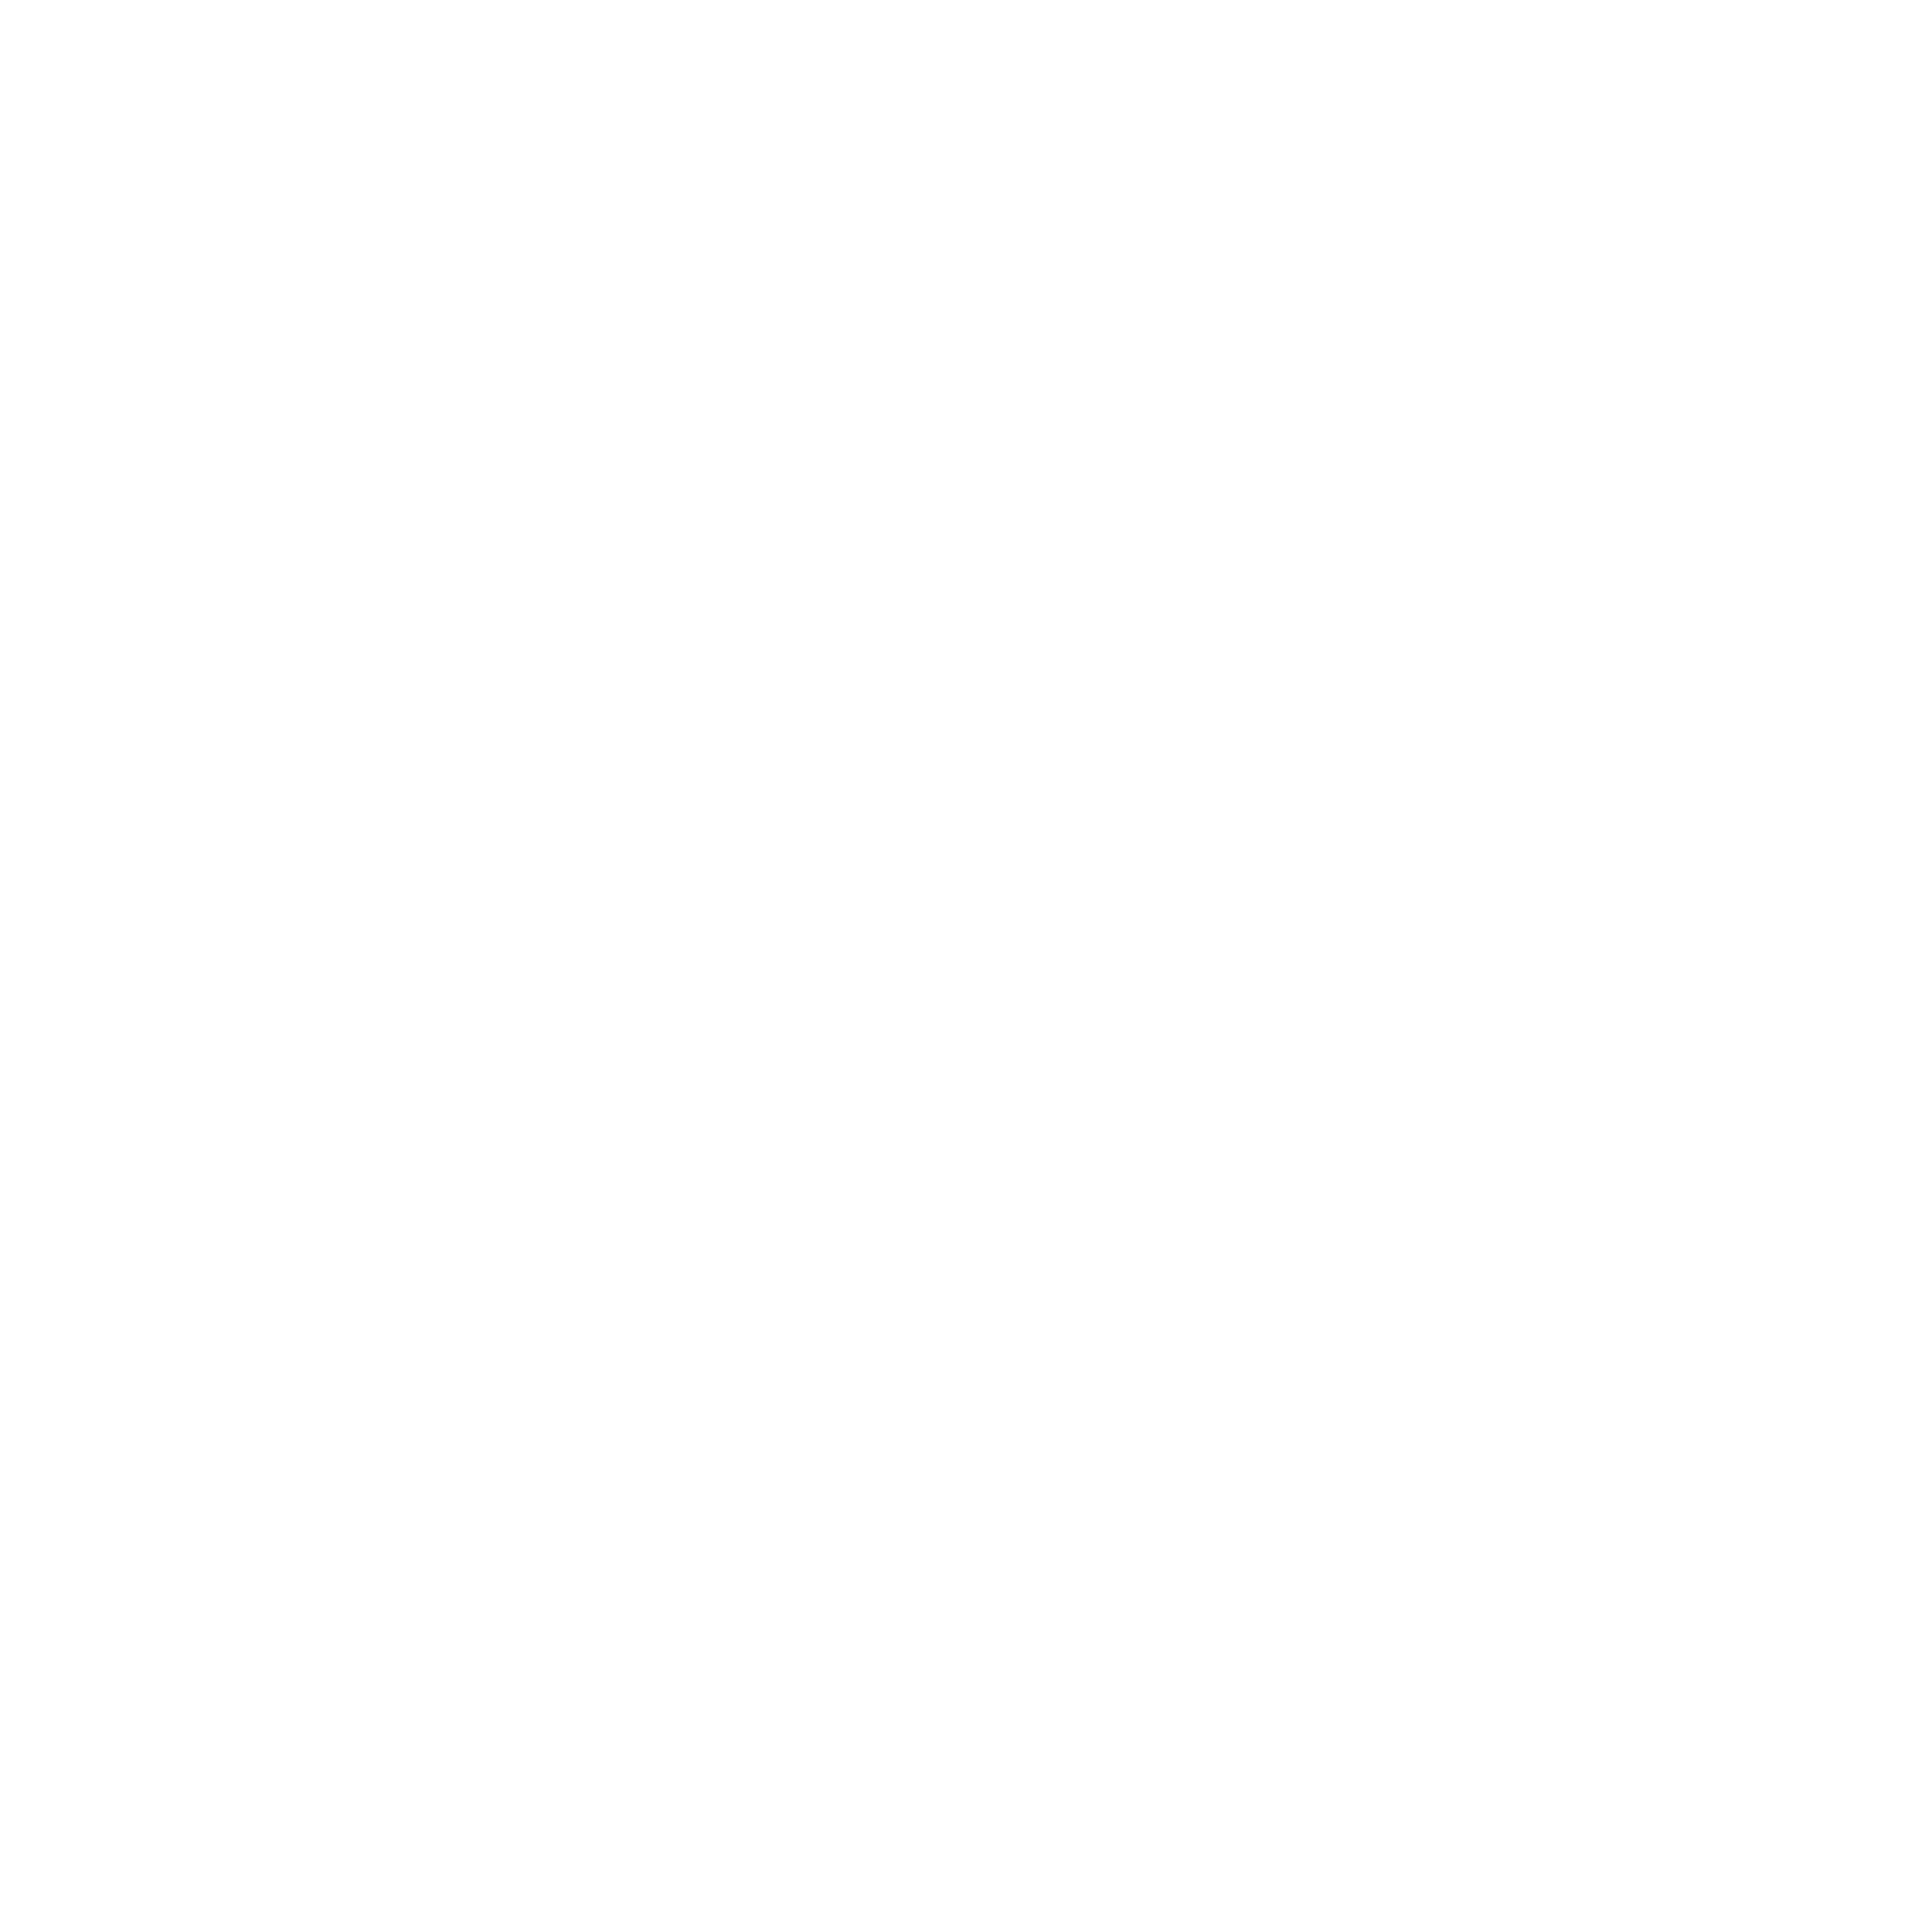 Hart-logos-black-trans.png